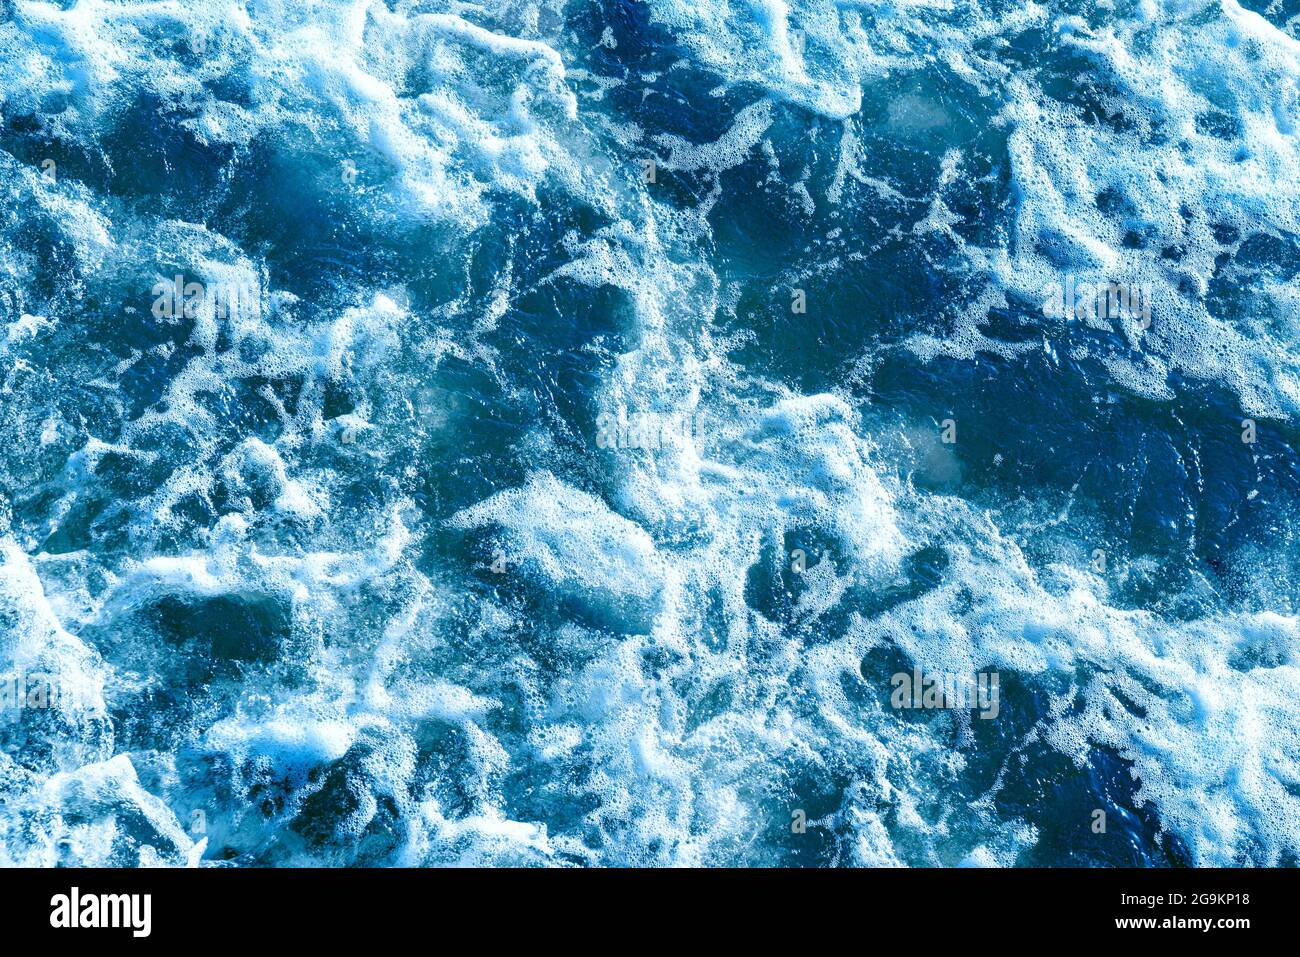 Deep blue sea water spray